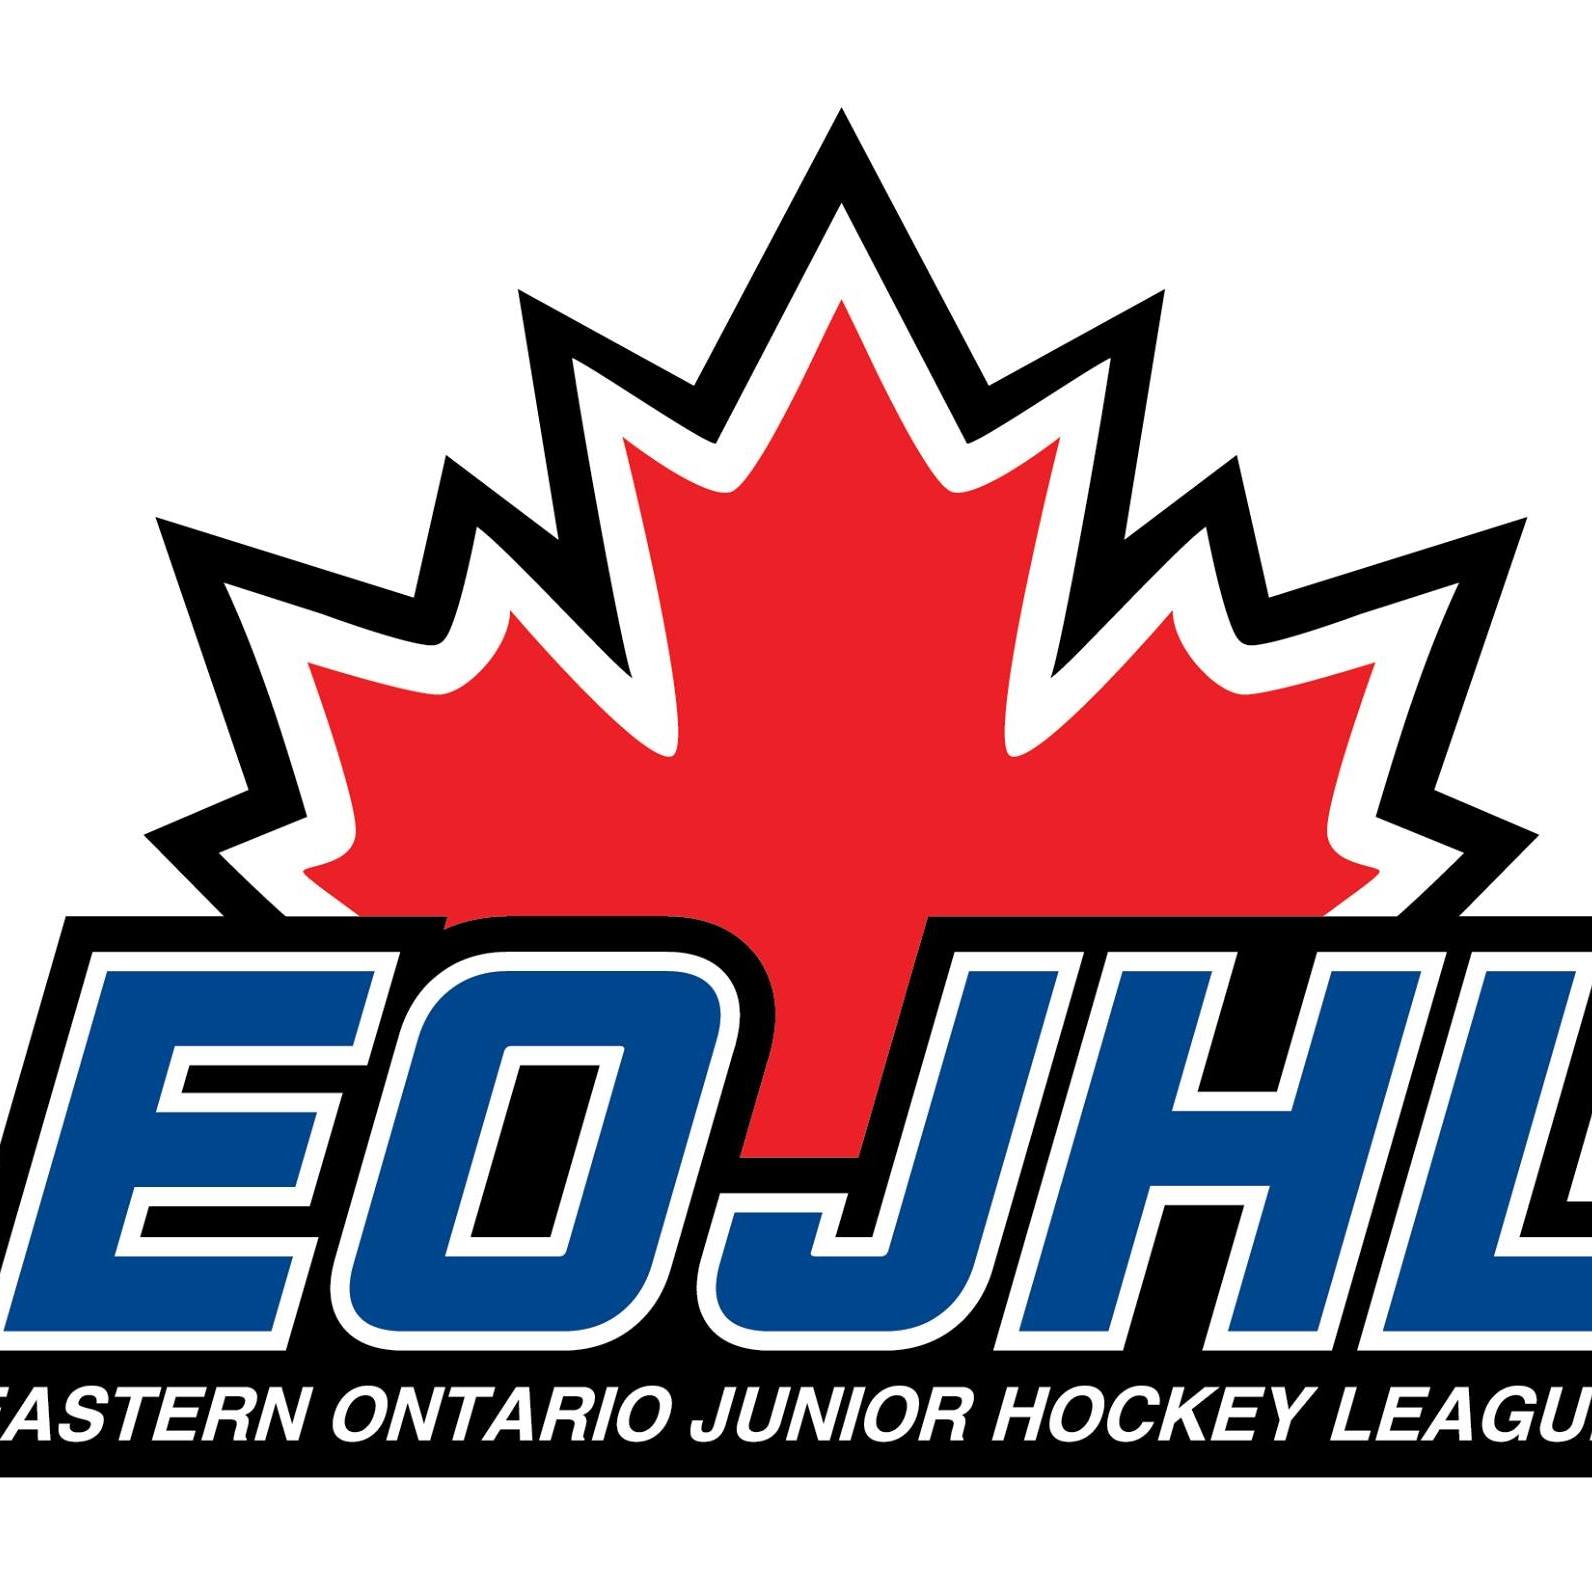 Eastern Ontario Junior Hockey League (EOJHL) | Organizational Profile, Work & Jobs